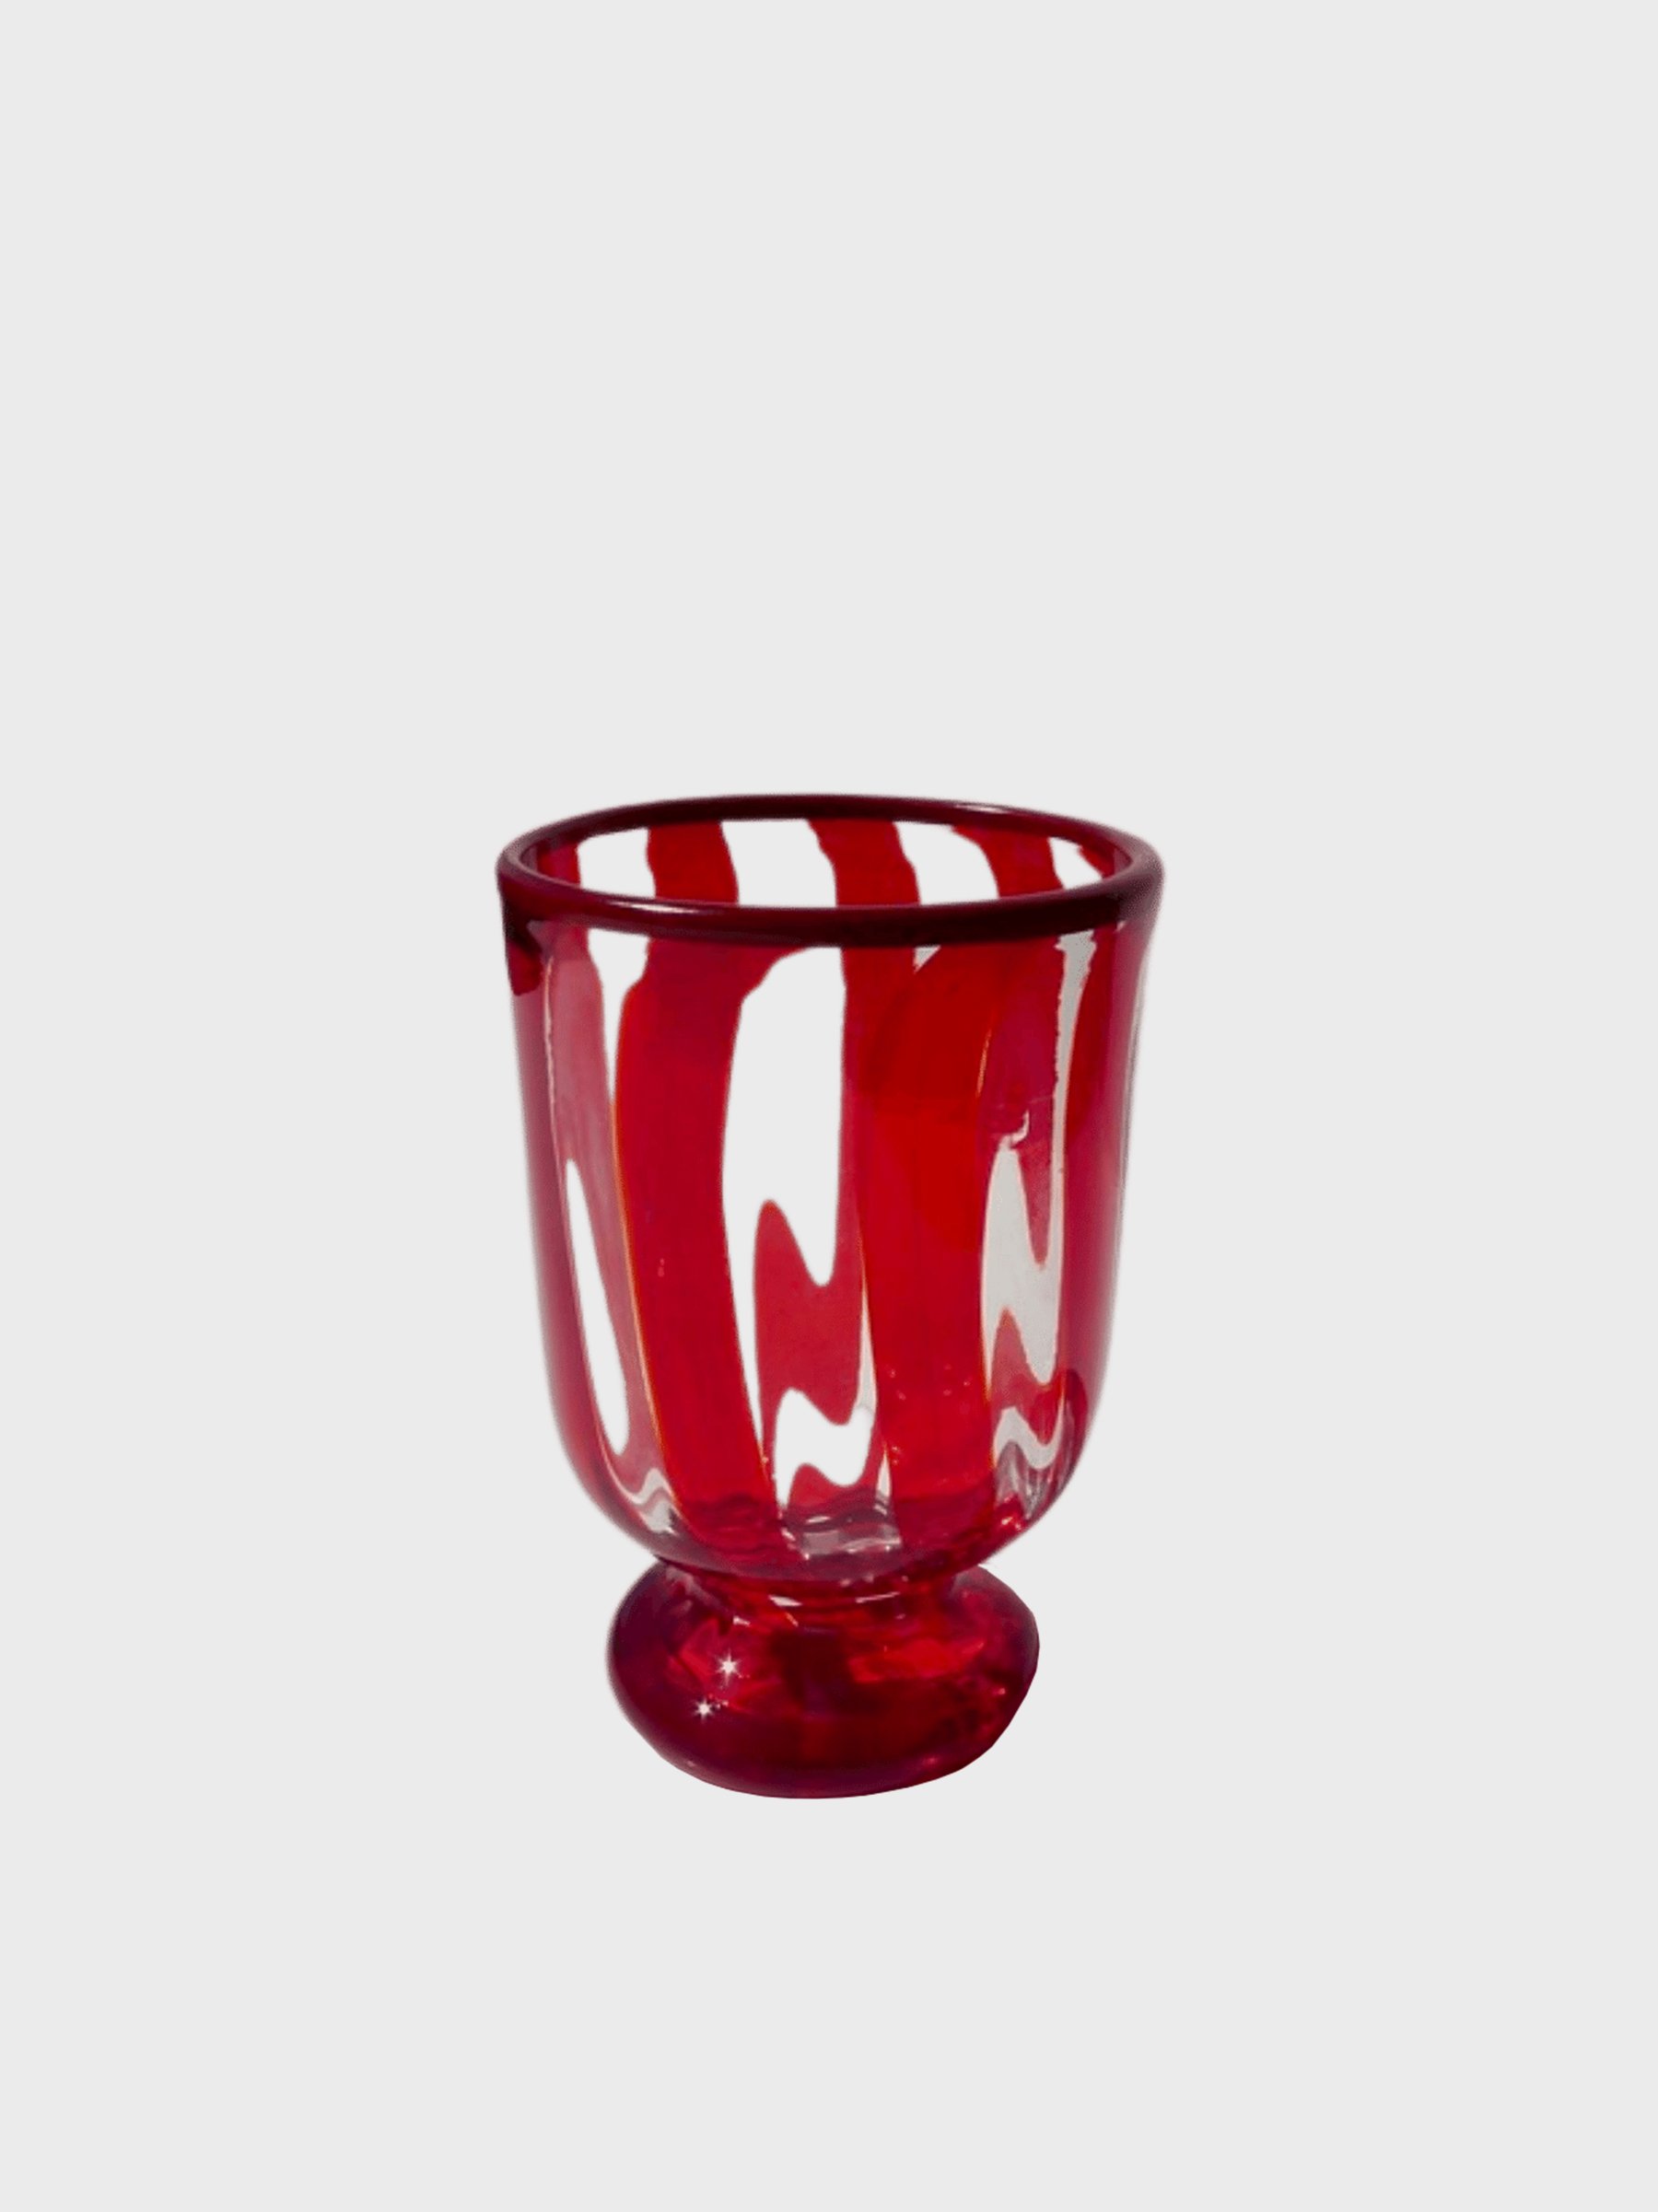 Candy-Cane-Red-El Mono-Glassware-Sunday-Shop.jpg